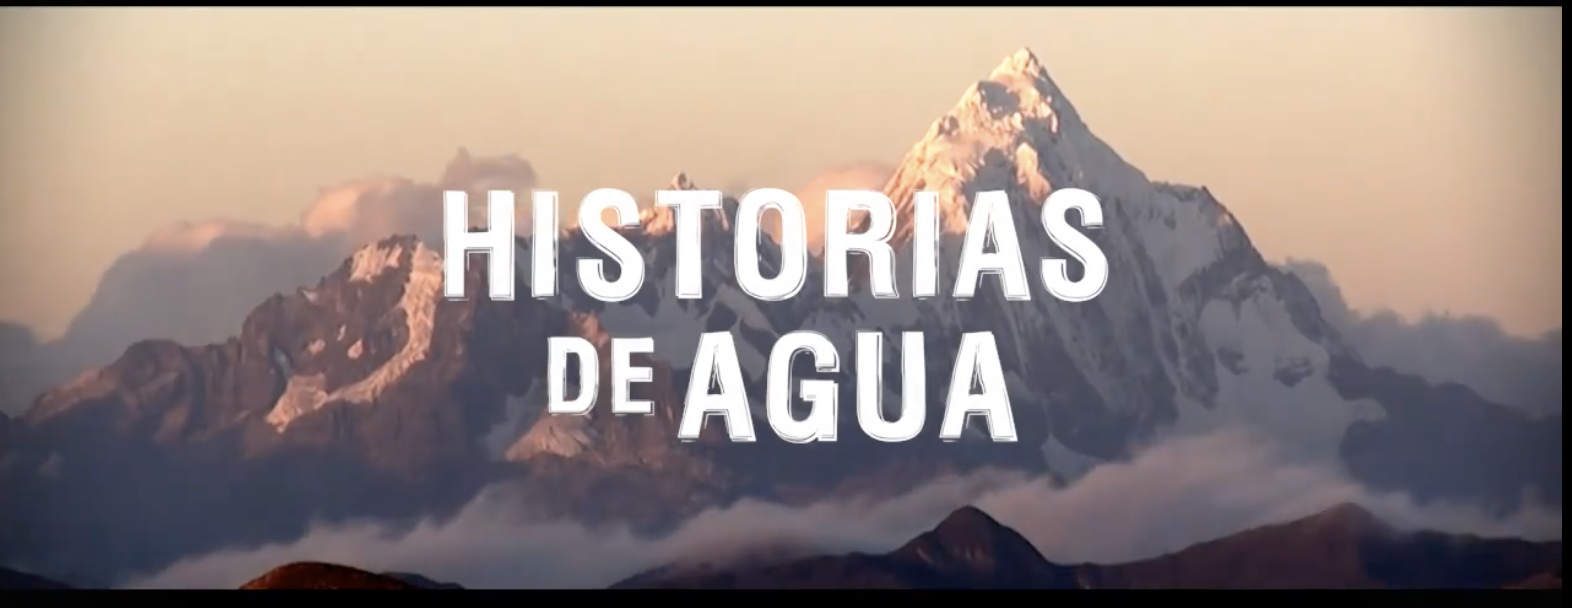 Red Muqui: Documental Historias de Agua (Video)- Red Muqui